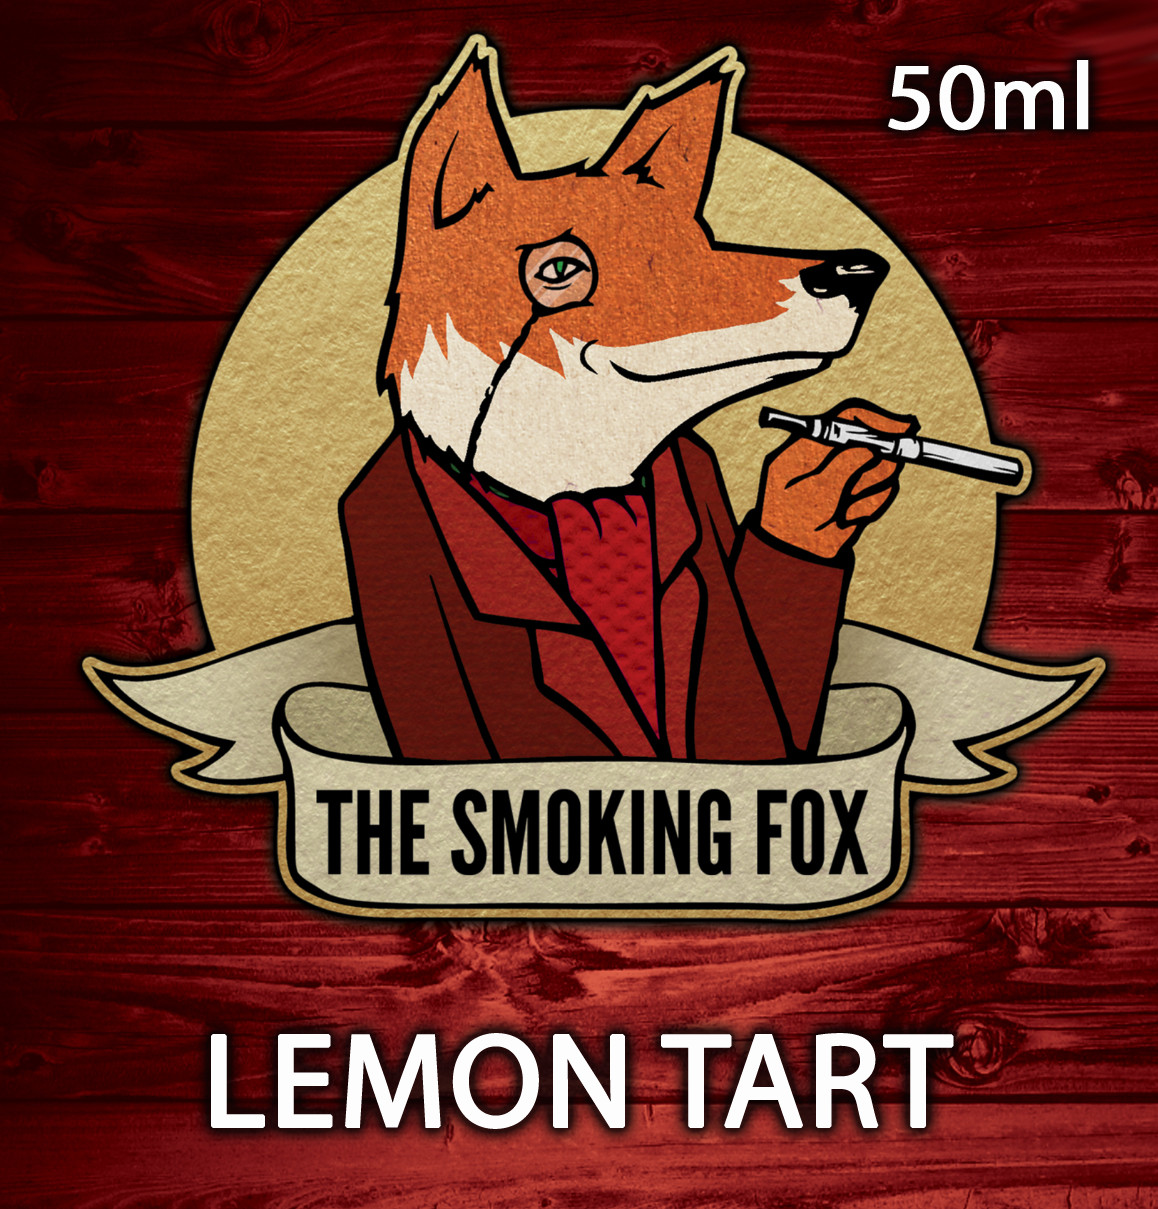 THE SMOKING FOX 50ml - LEMON TART